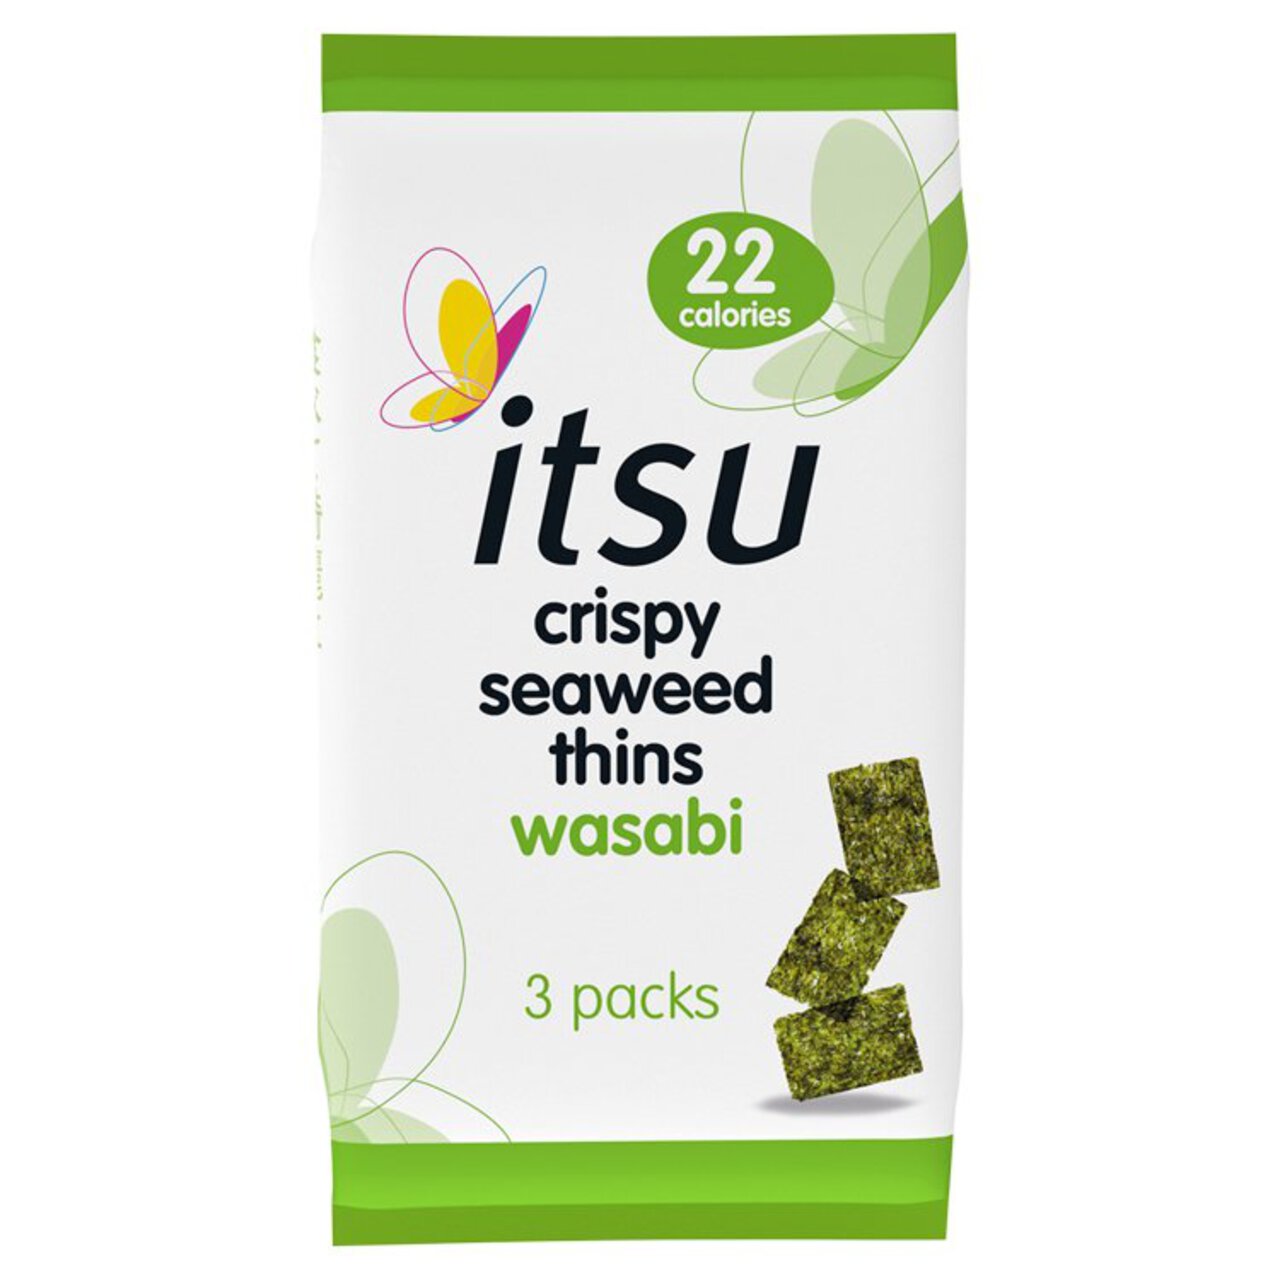 Itsu wasabi crispy seaweed thins multipack 3 per pack